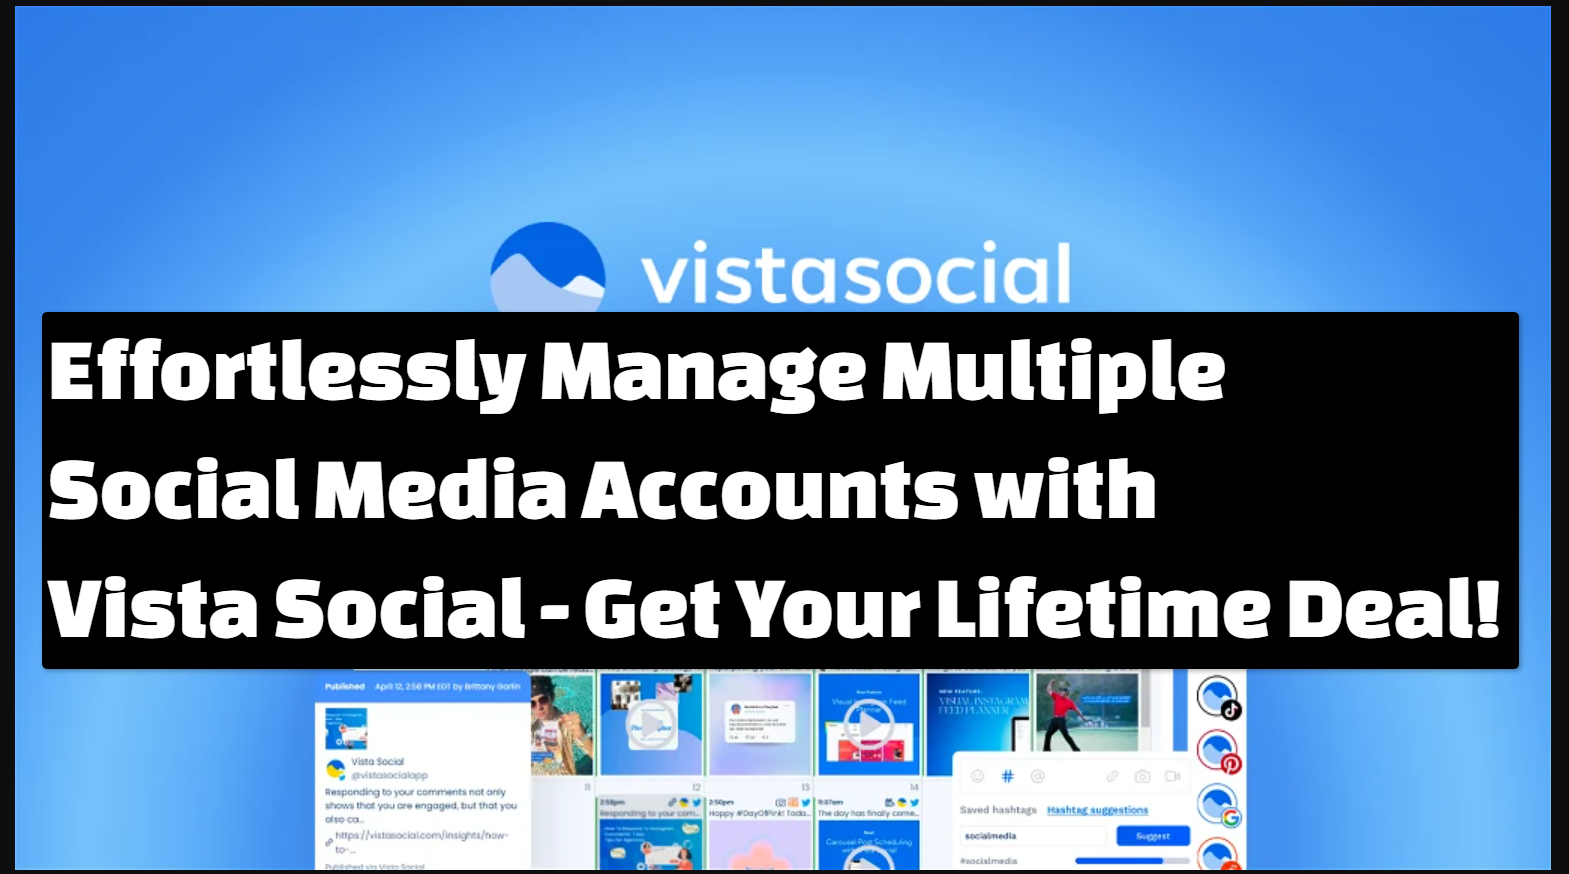 Effortlessly Manage Multiple Social Media Accounts with Vista Social Get Your Lifetime Deal Effortlessly Manage Multiple Social Media Accounts with Vista Social - Get Your Lifetime Deal!